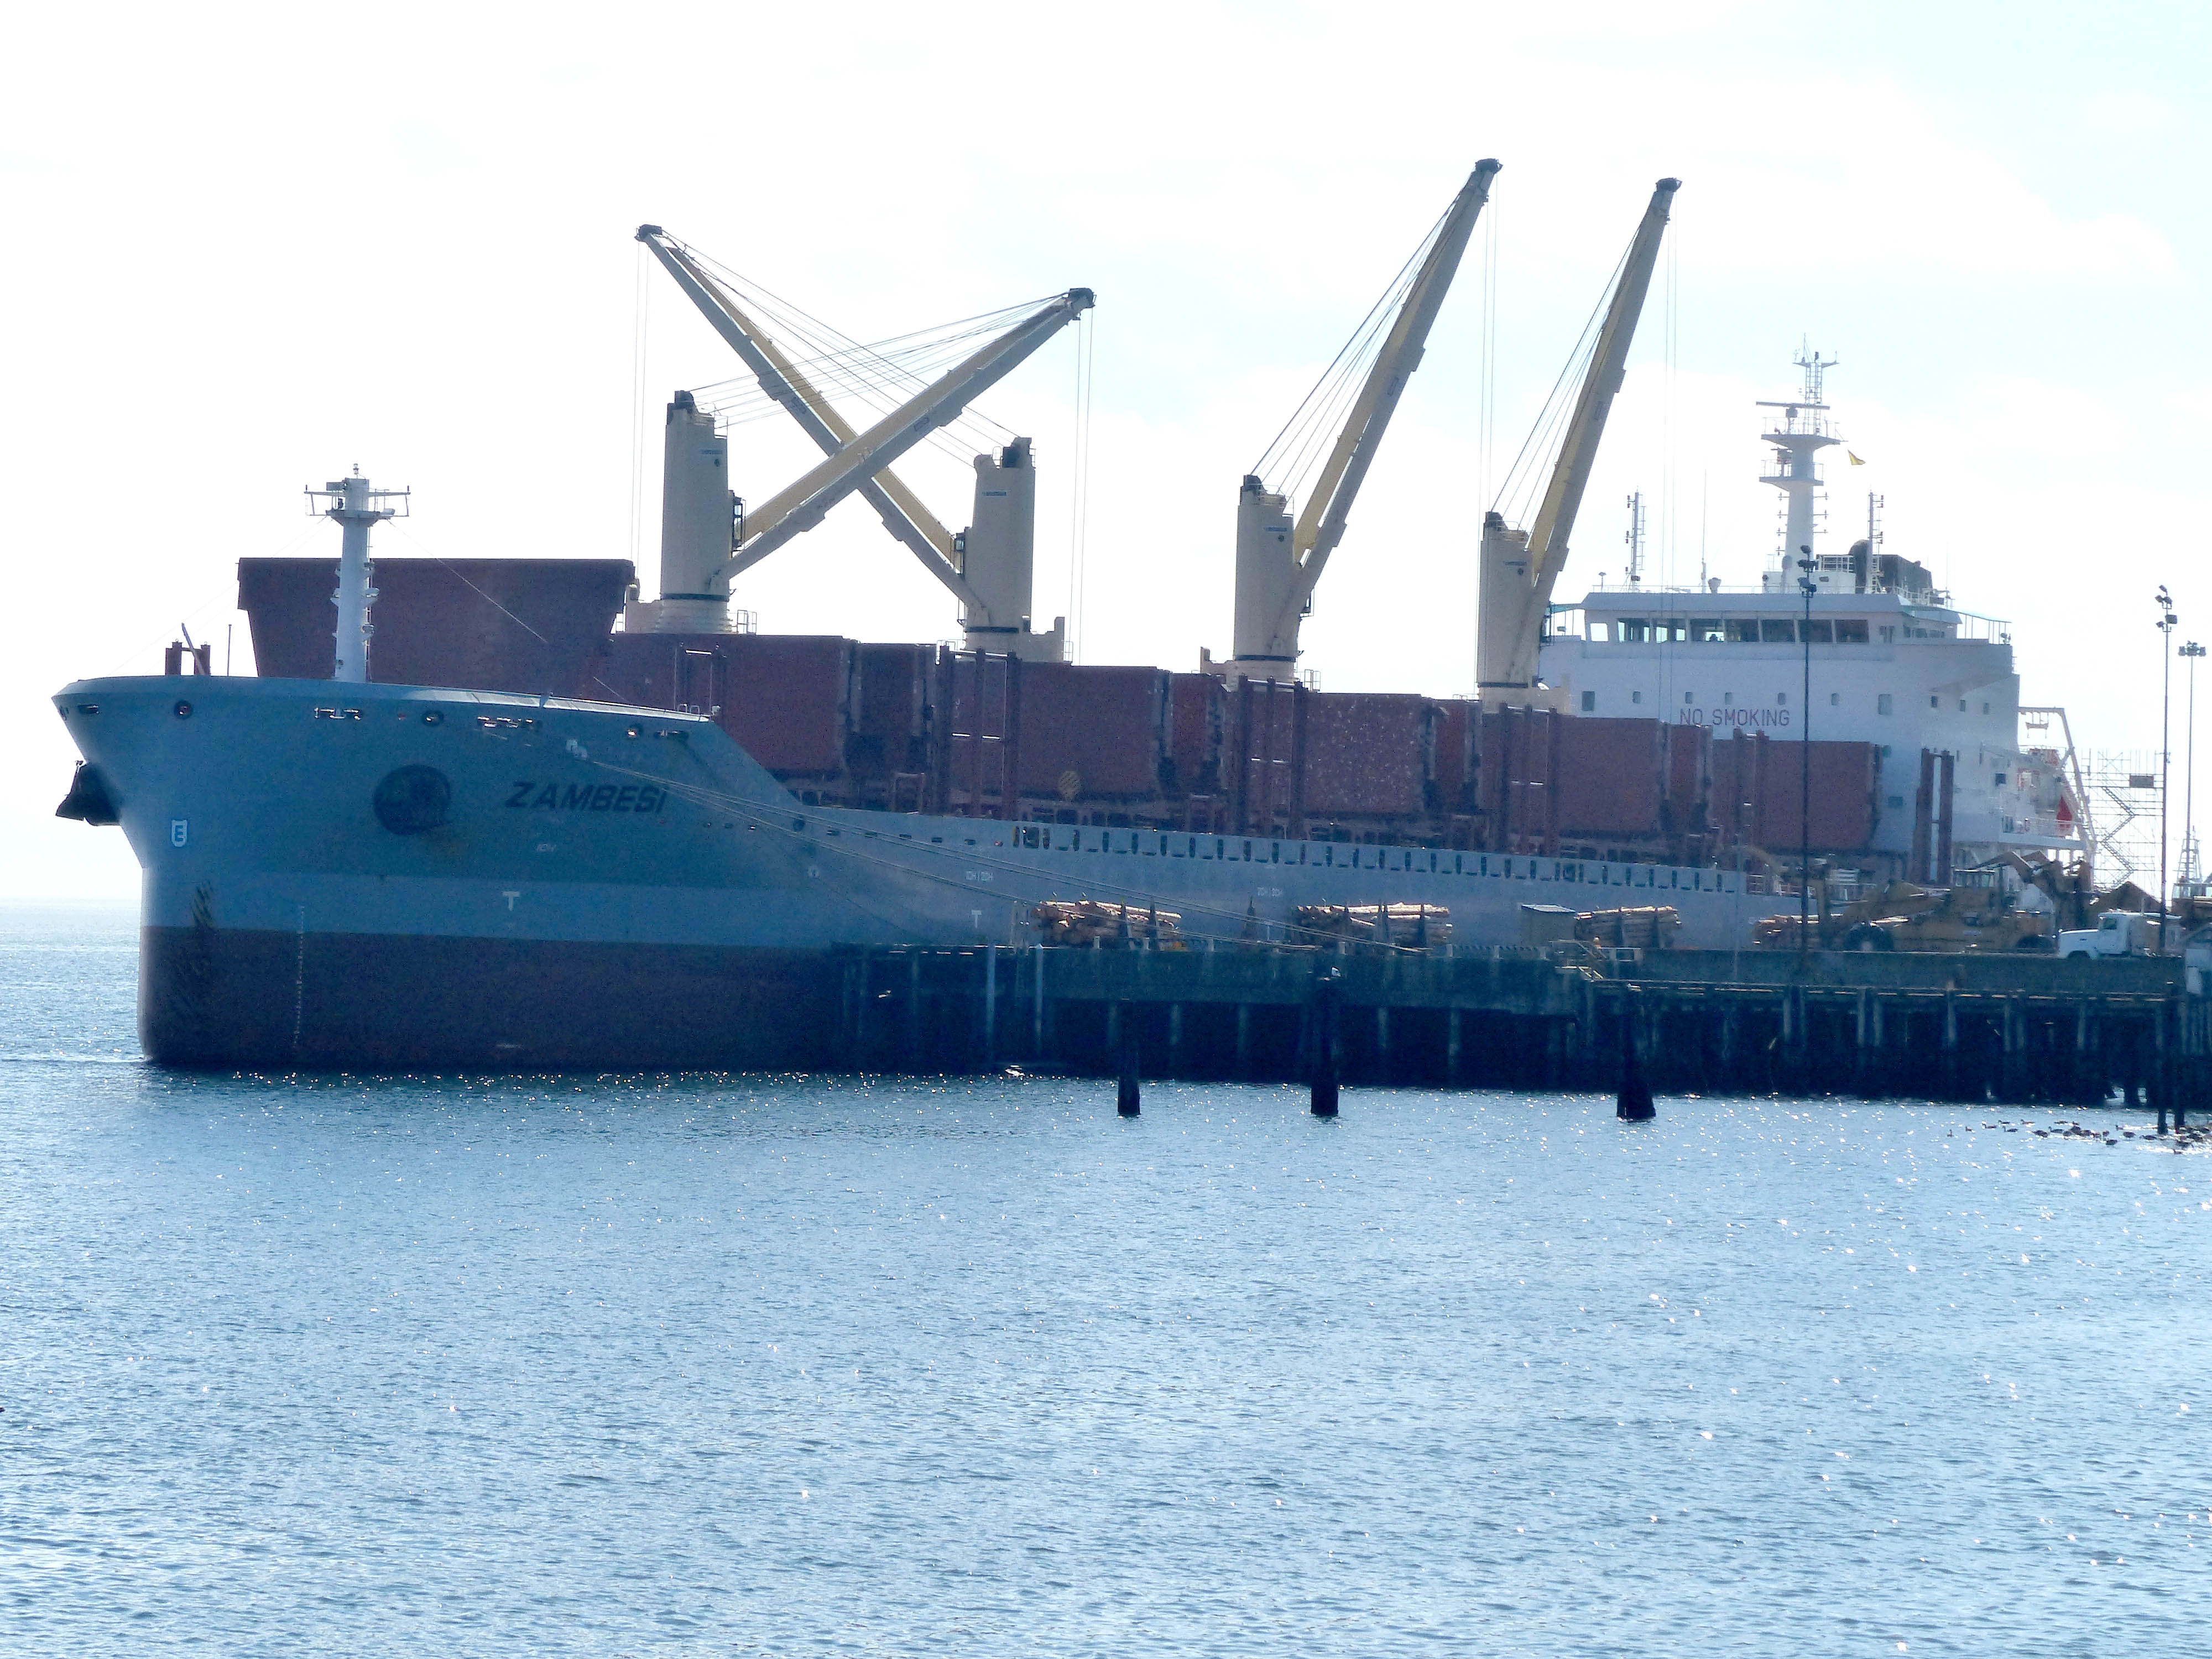 The 587-foot cargo ship Zambesi